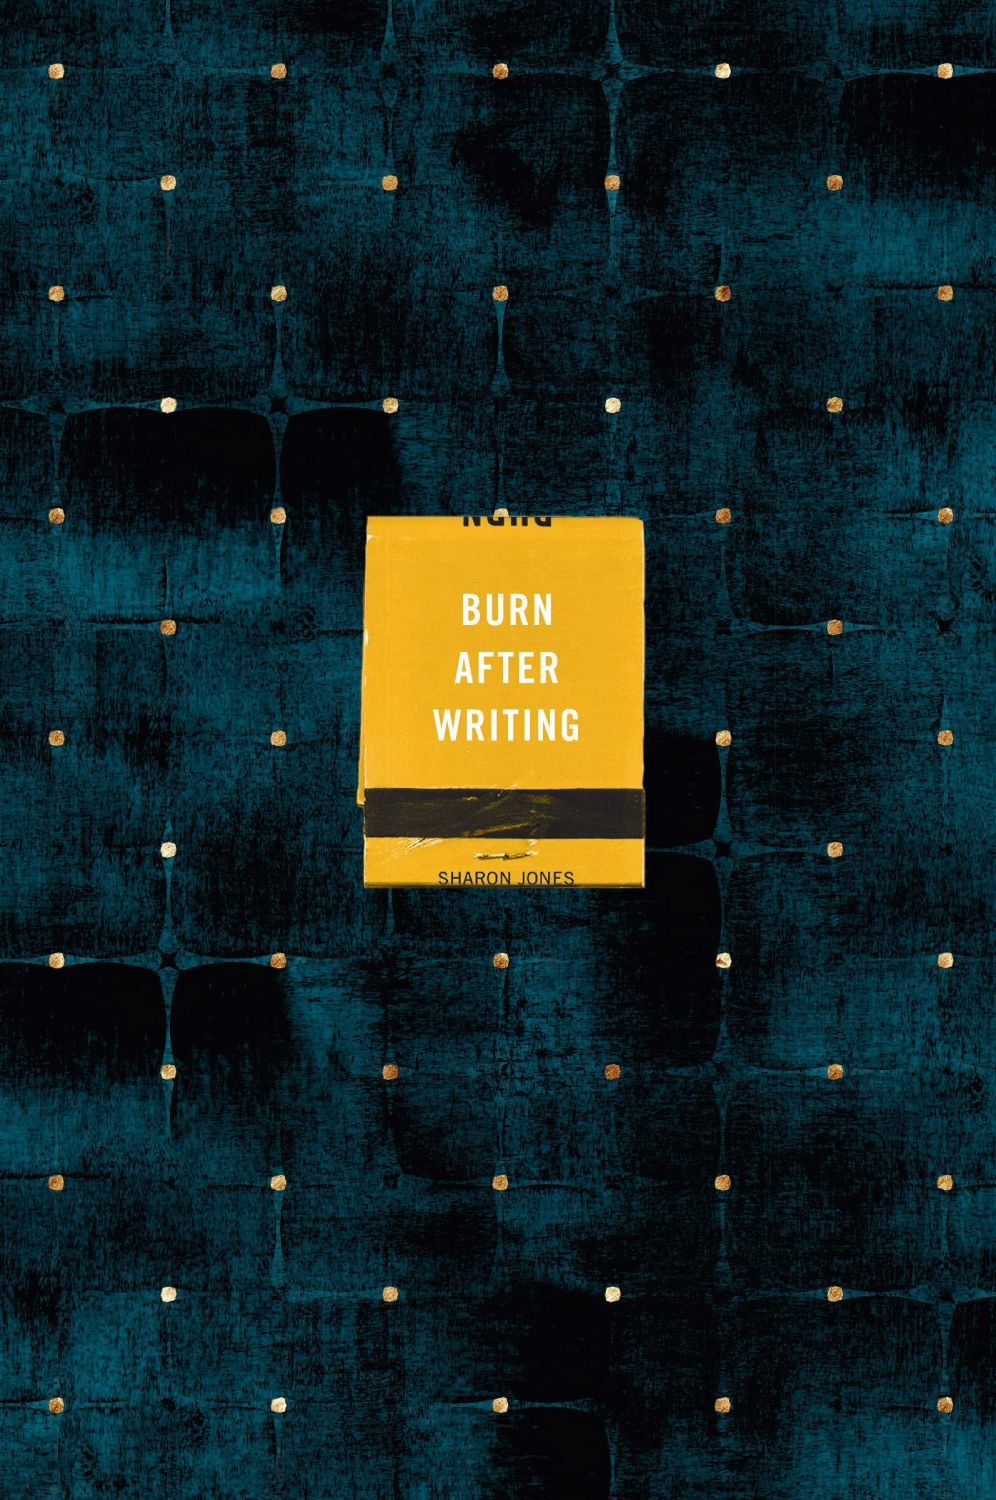 sharon jones burn after writing book questions